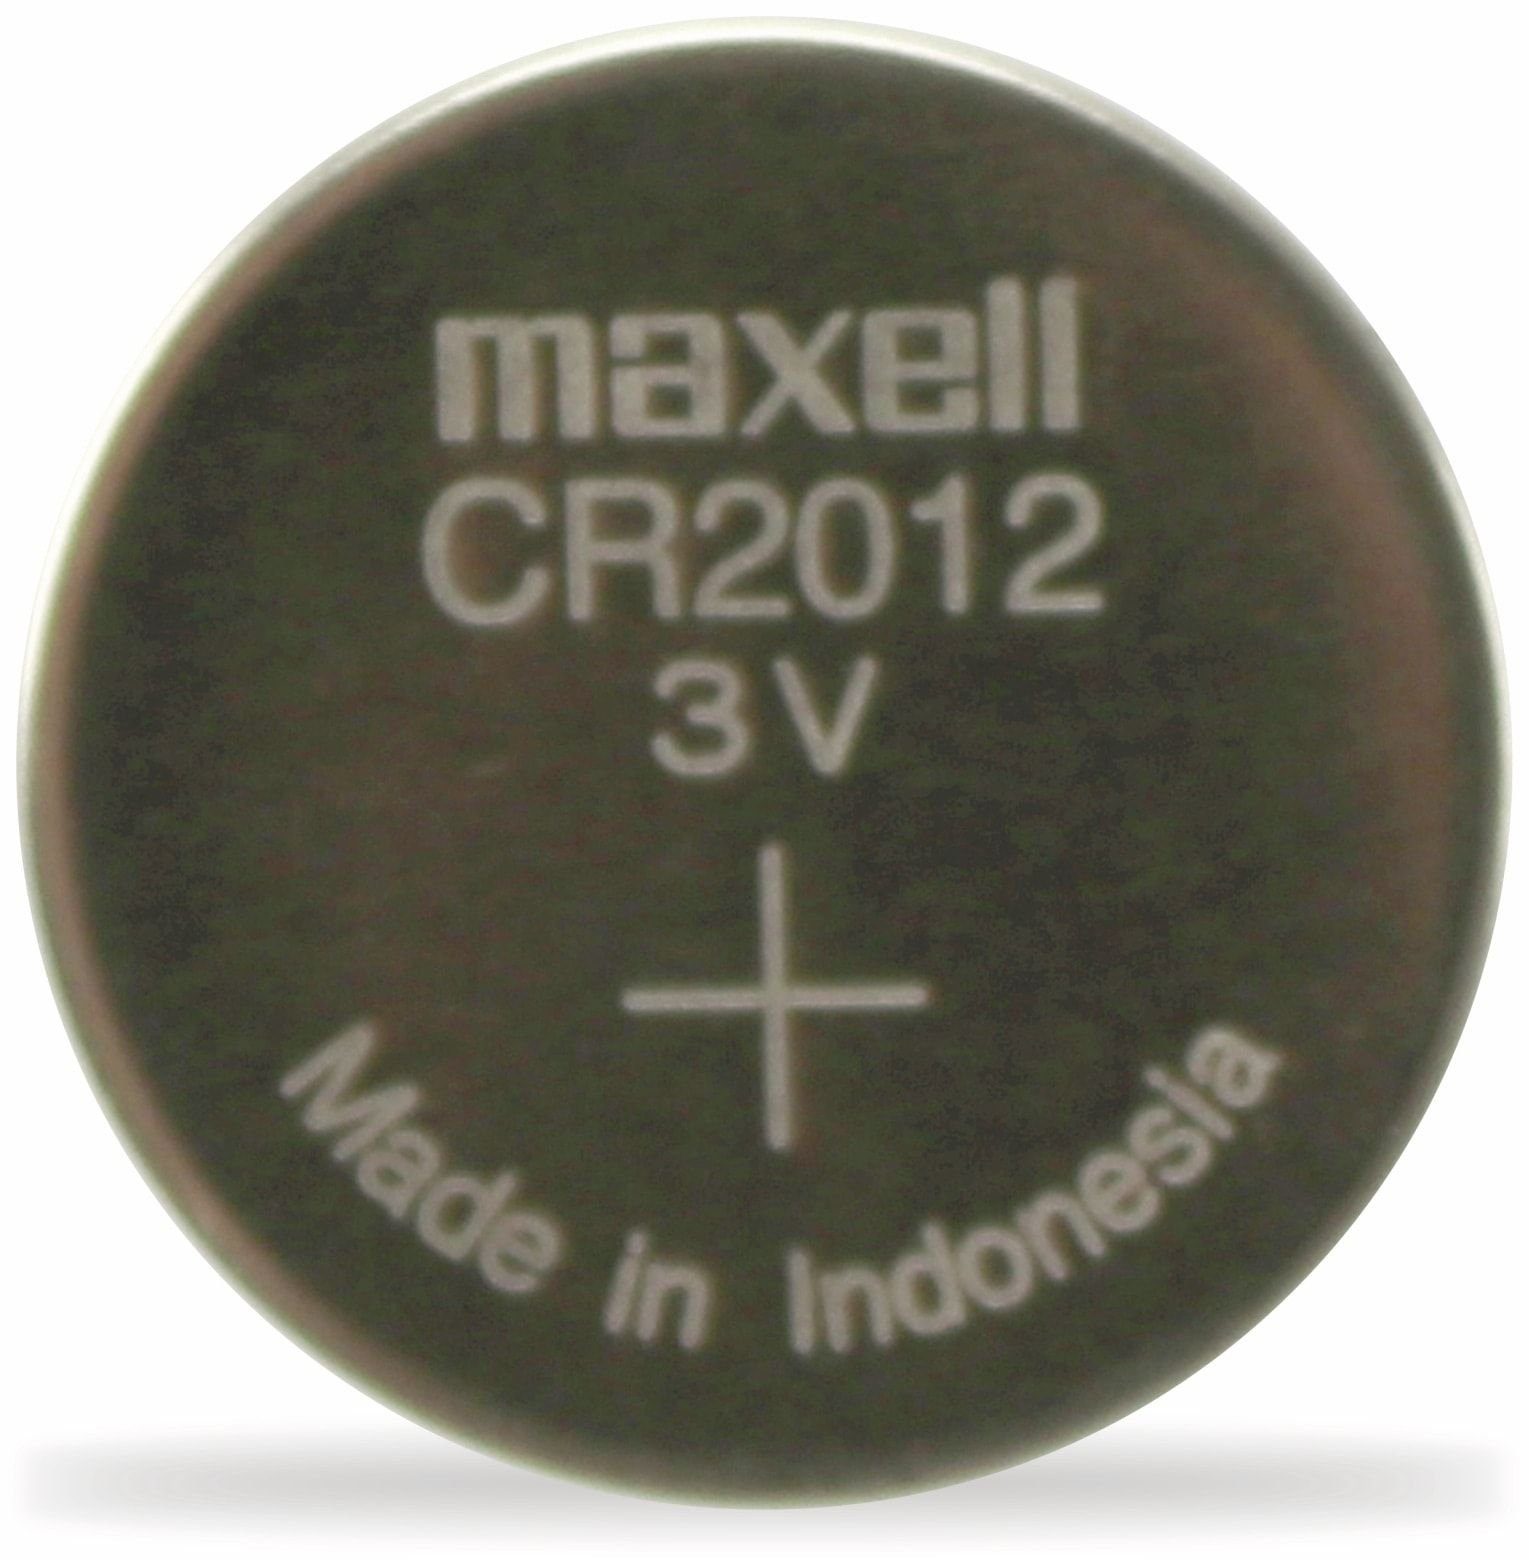 V-, 50 1 Knopfzelle 3 Knopfzelle Lithium, CR2012, mAh, Maxell MAXELL